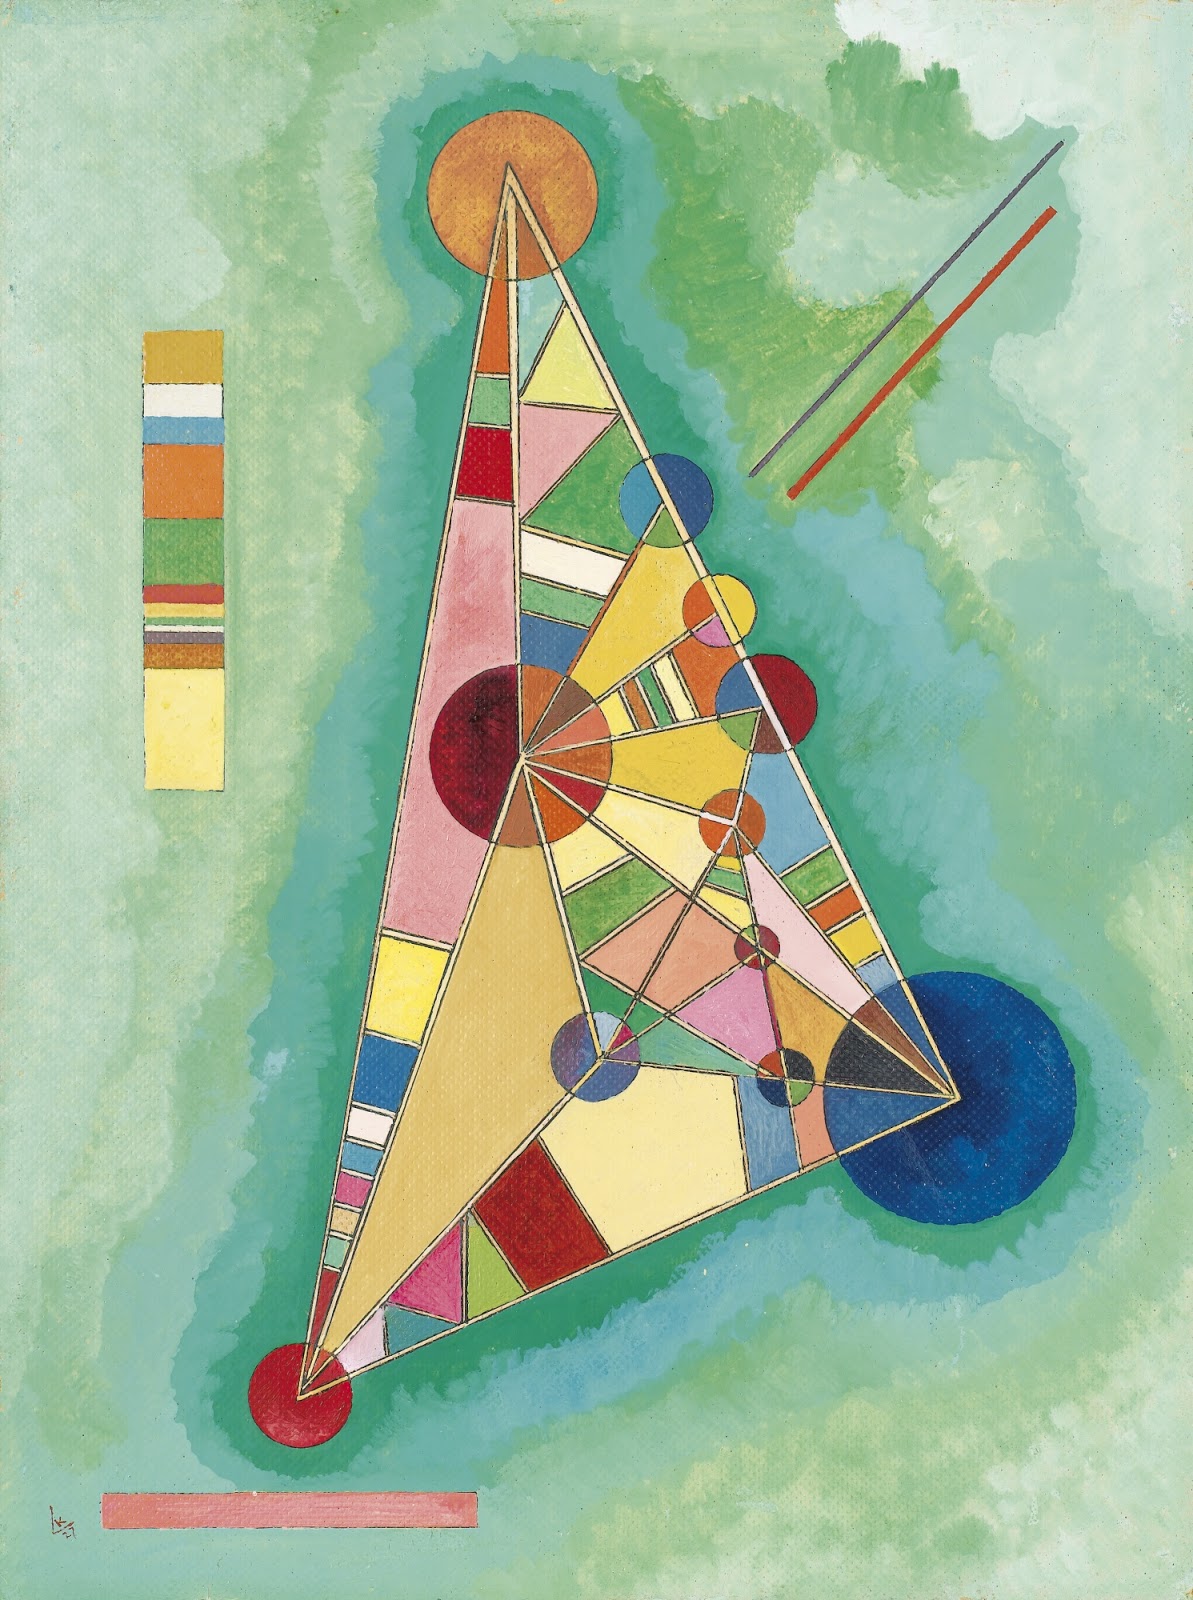 Wassily+Kandinsky-1866-1944 (334).jpg